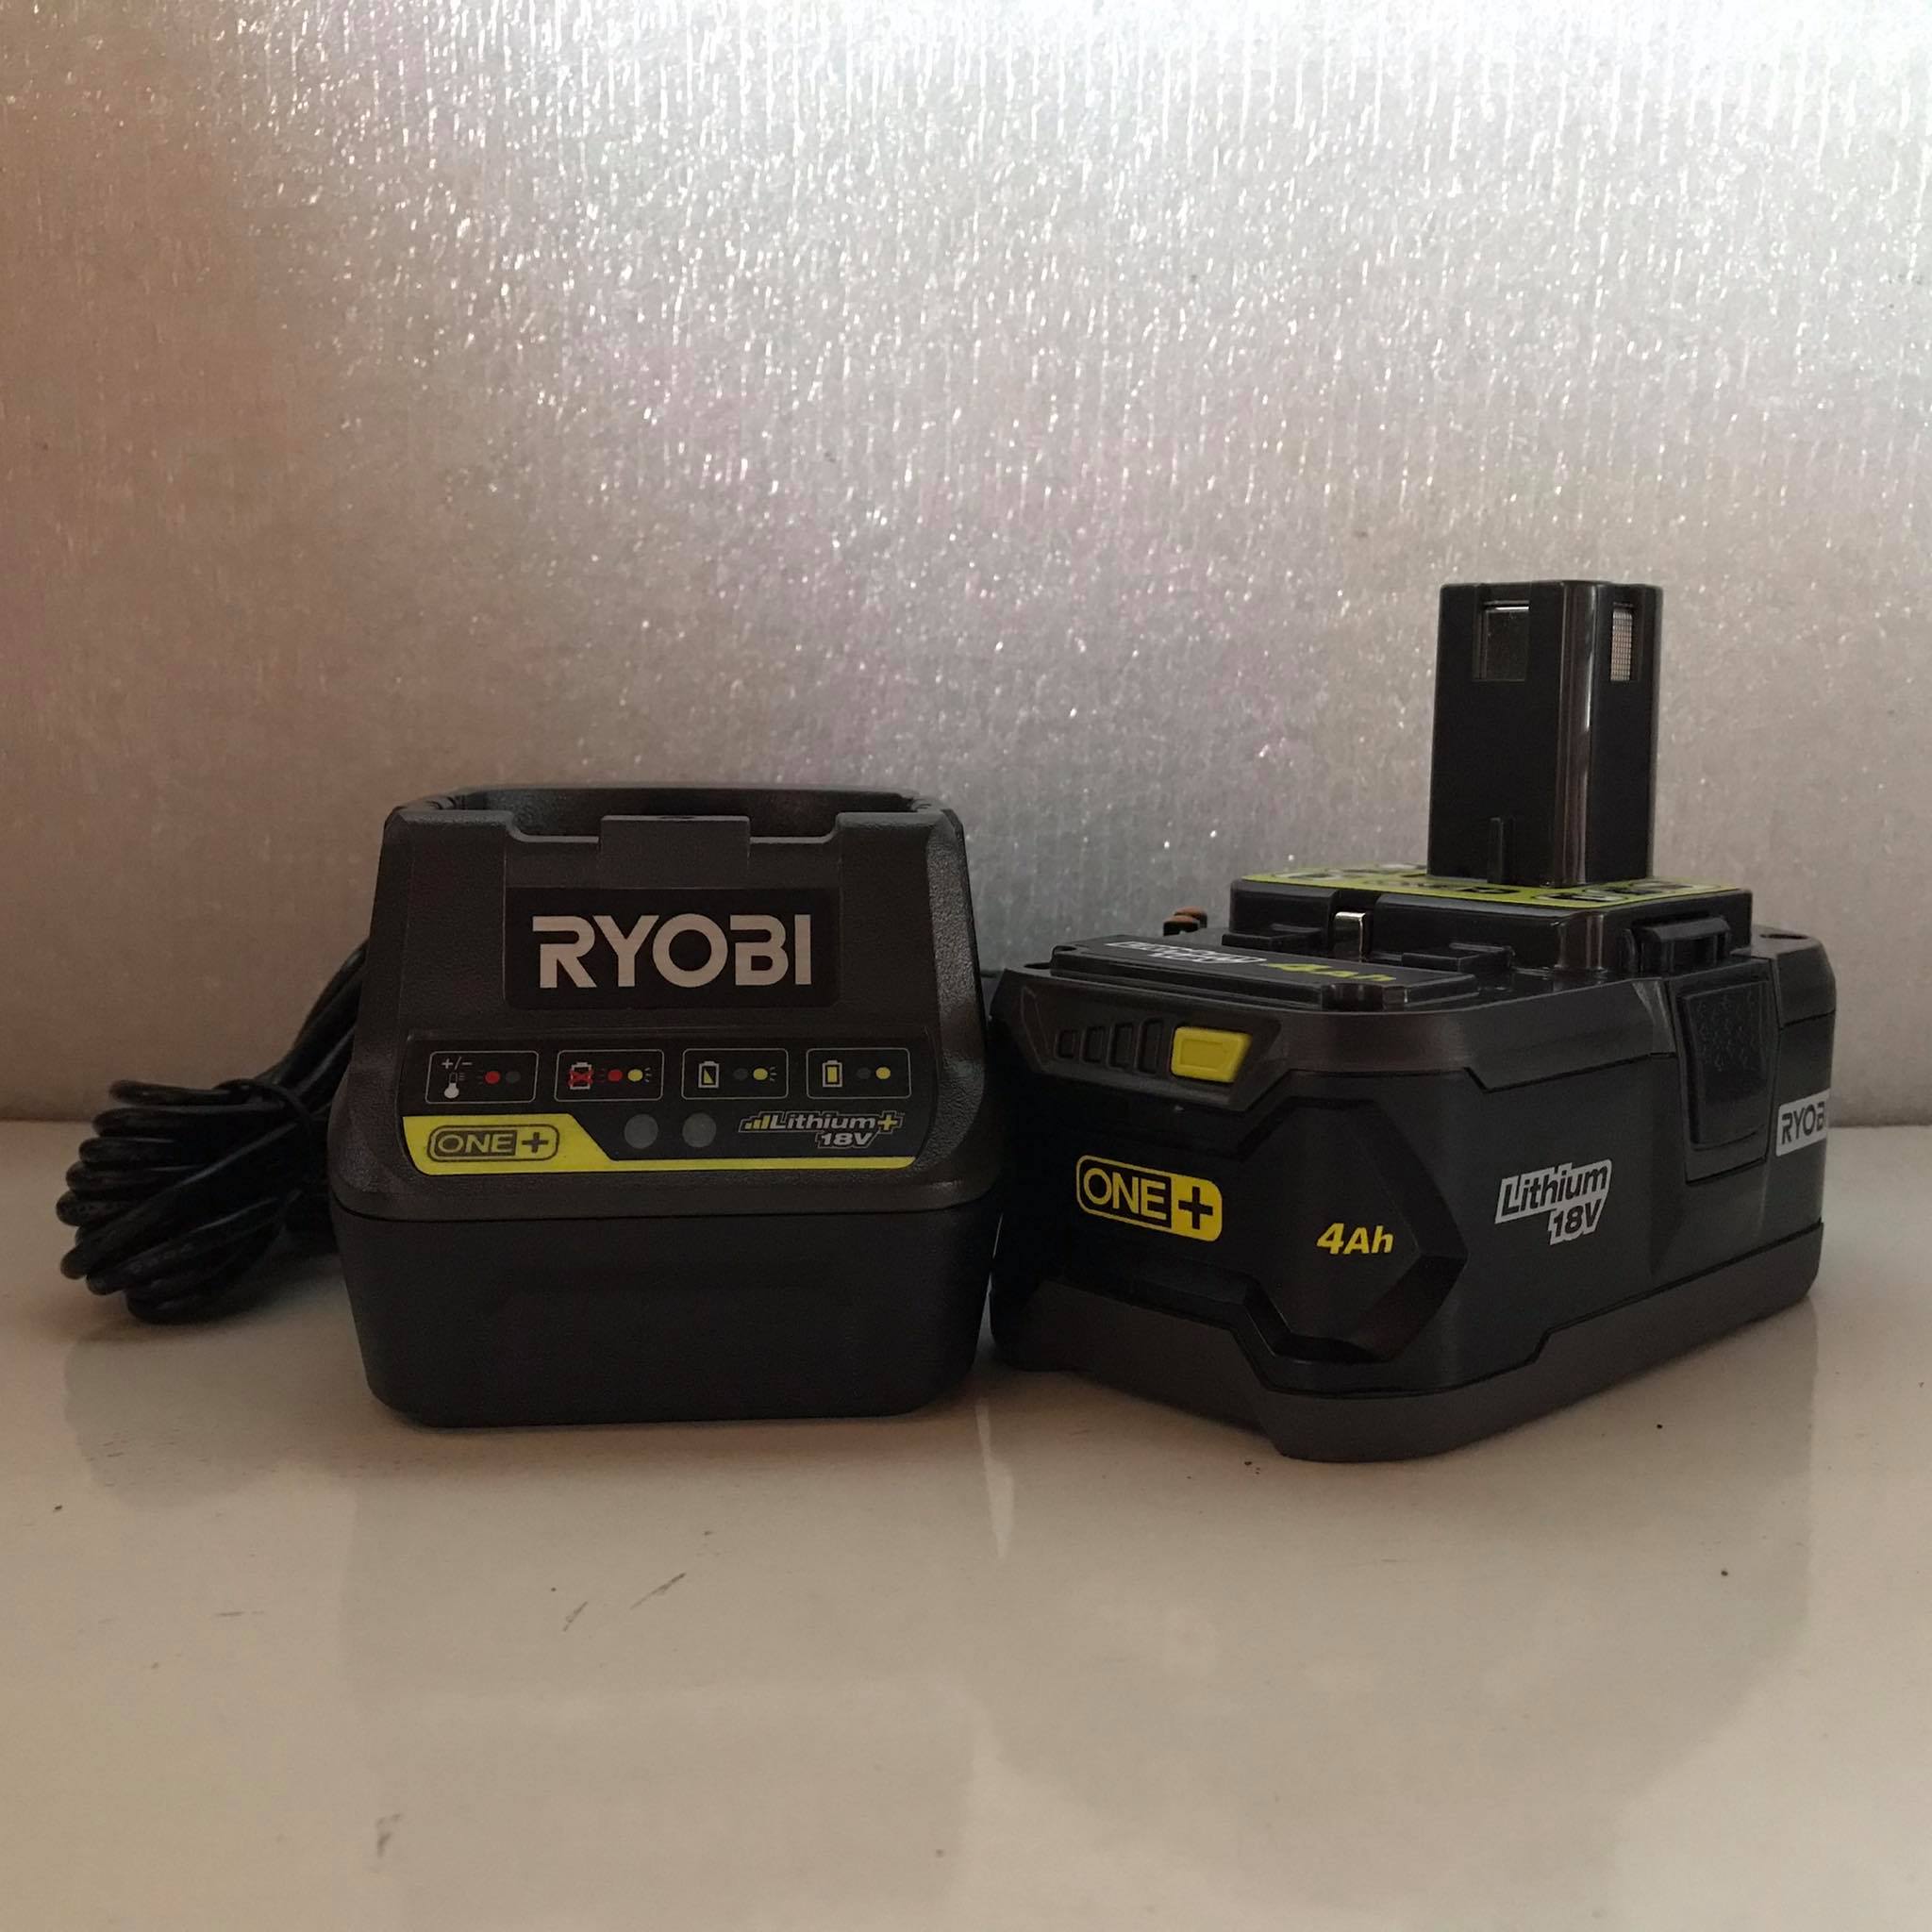 How To Reset Ryobi 18V Battery